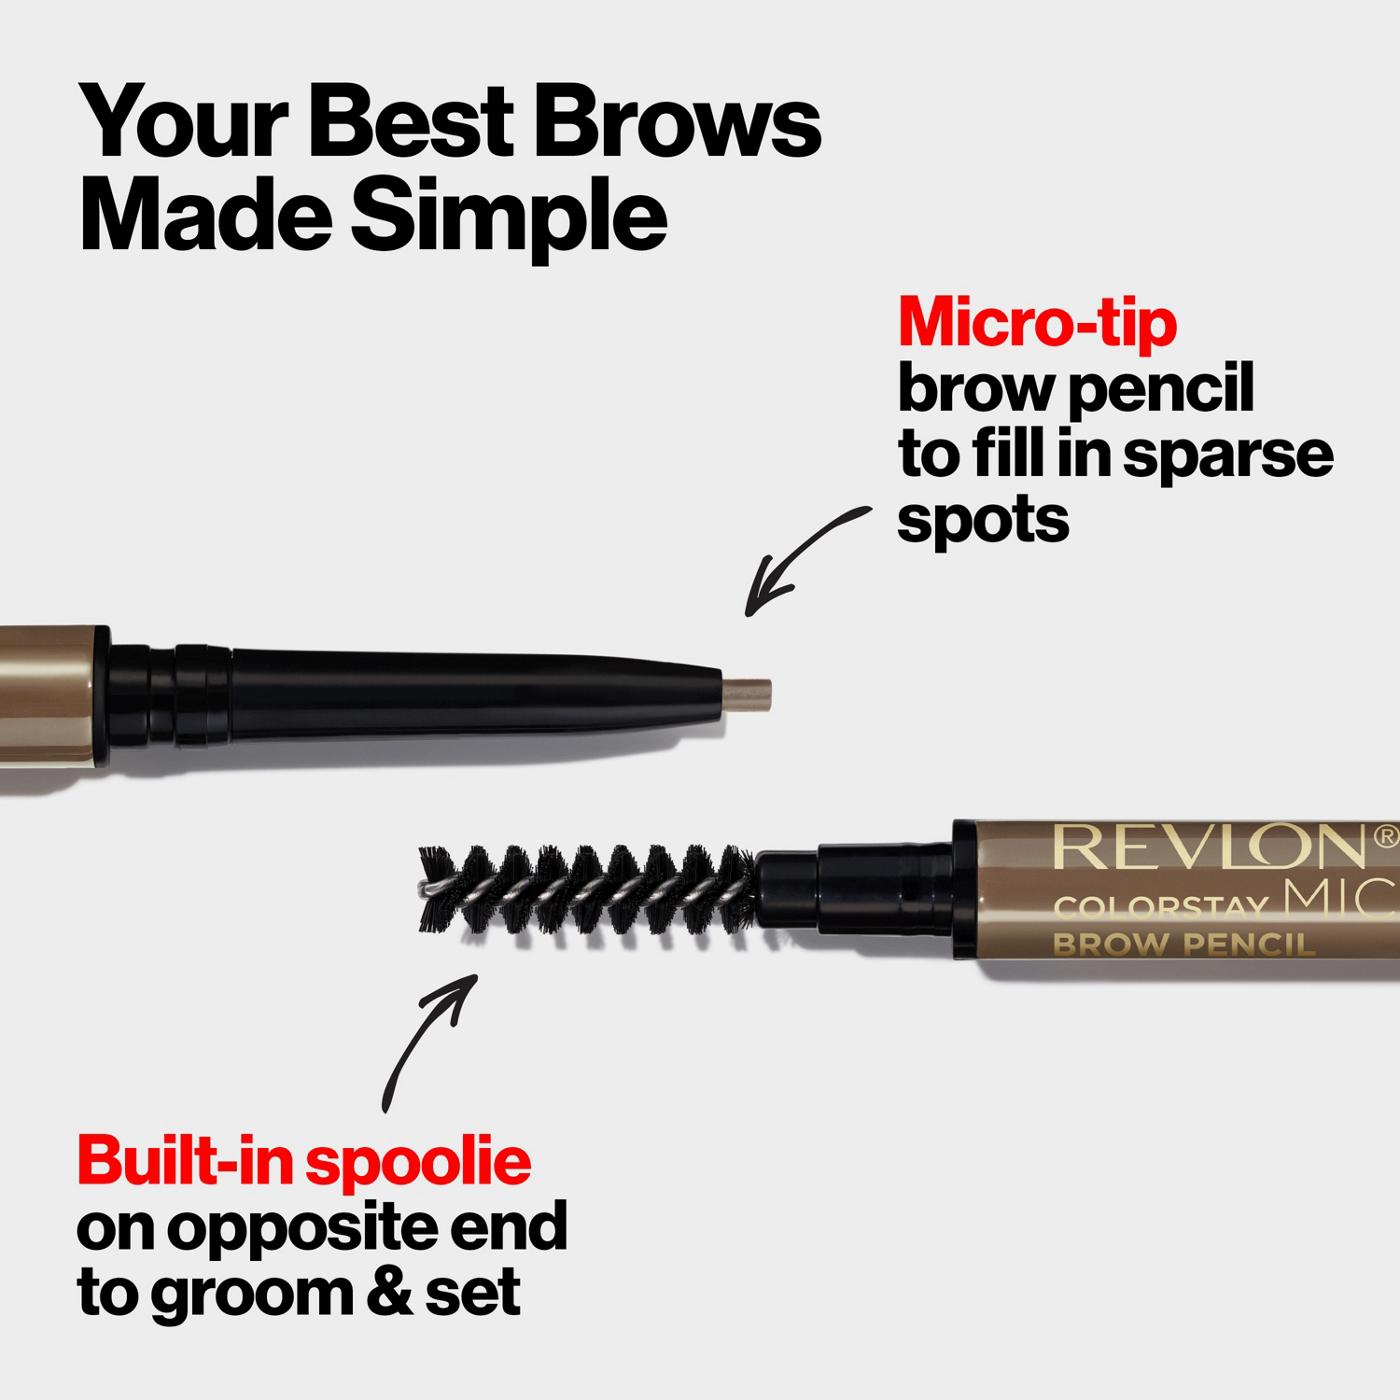 Revlon ColorStay Micro Brow Pencil - Medium Brown; image 9 of 9